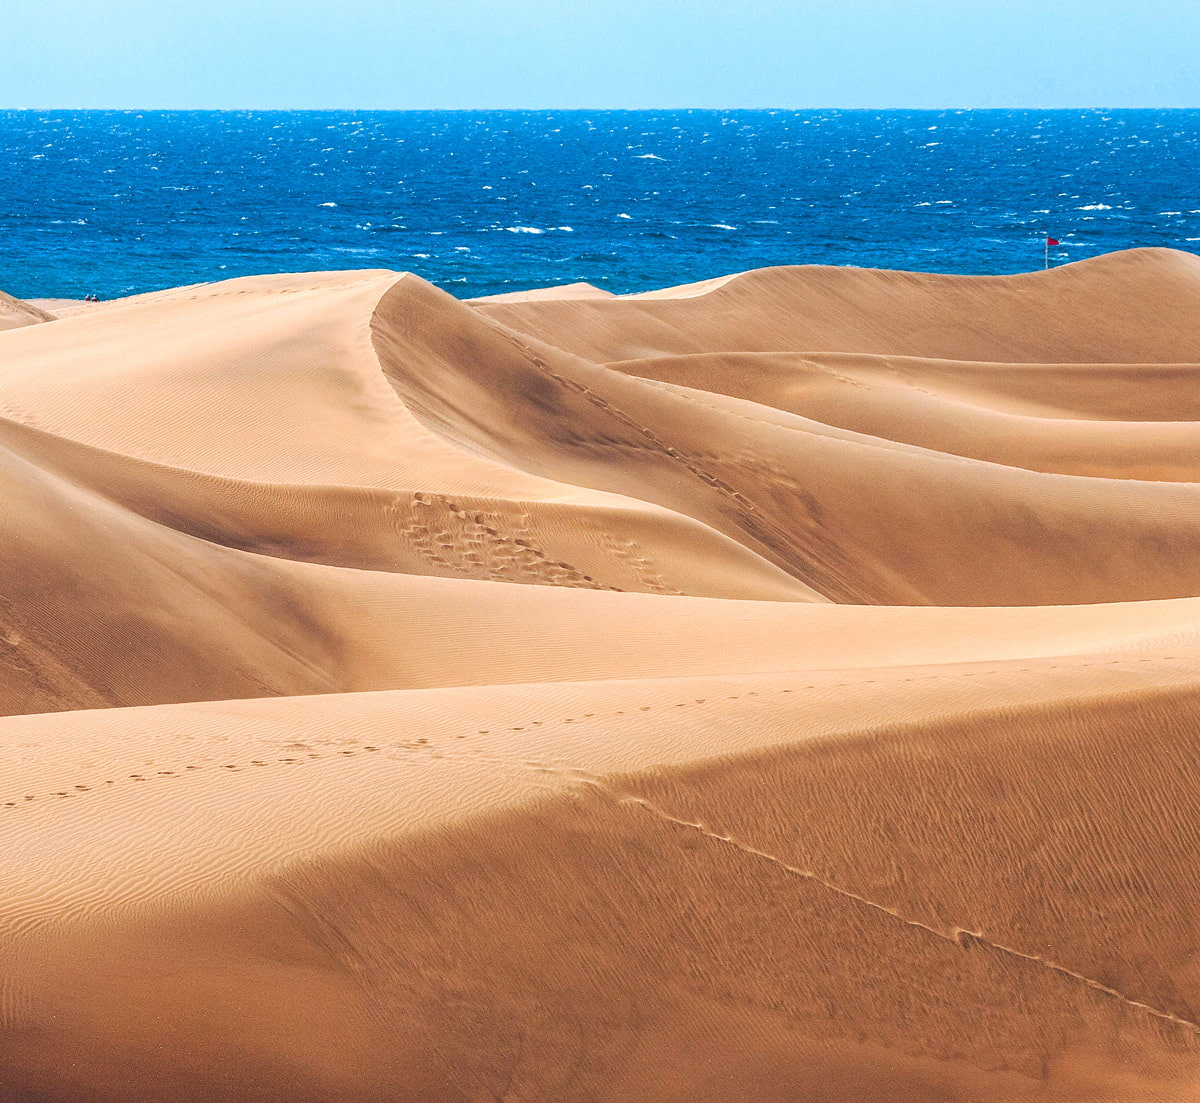 Sand dunes in Gran Canaria